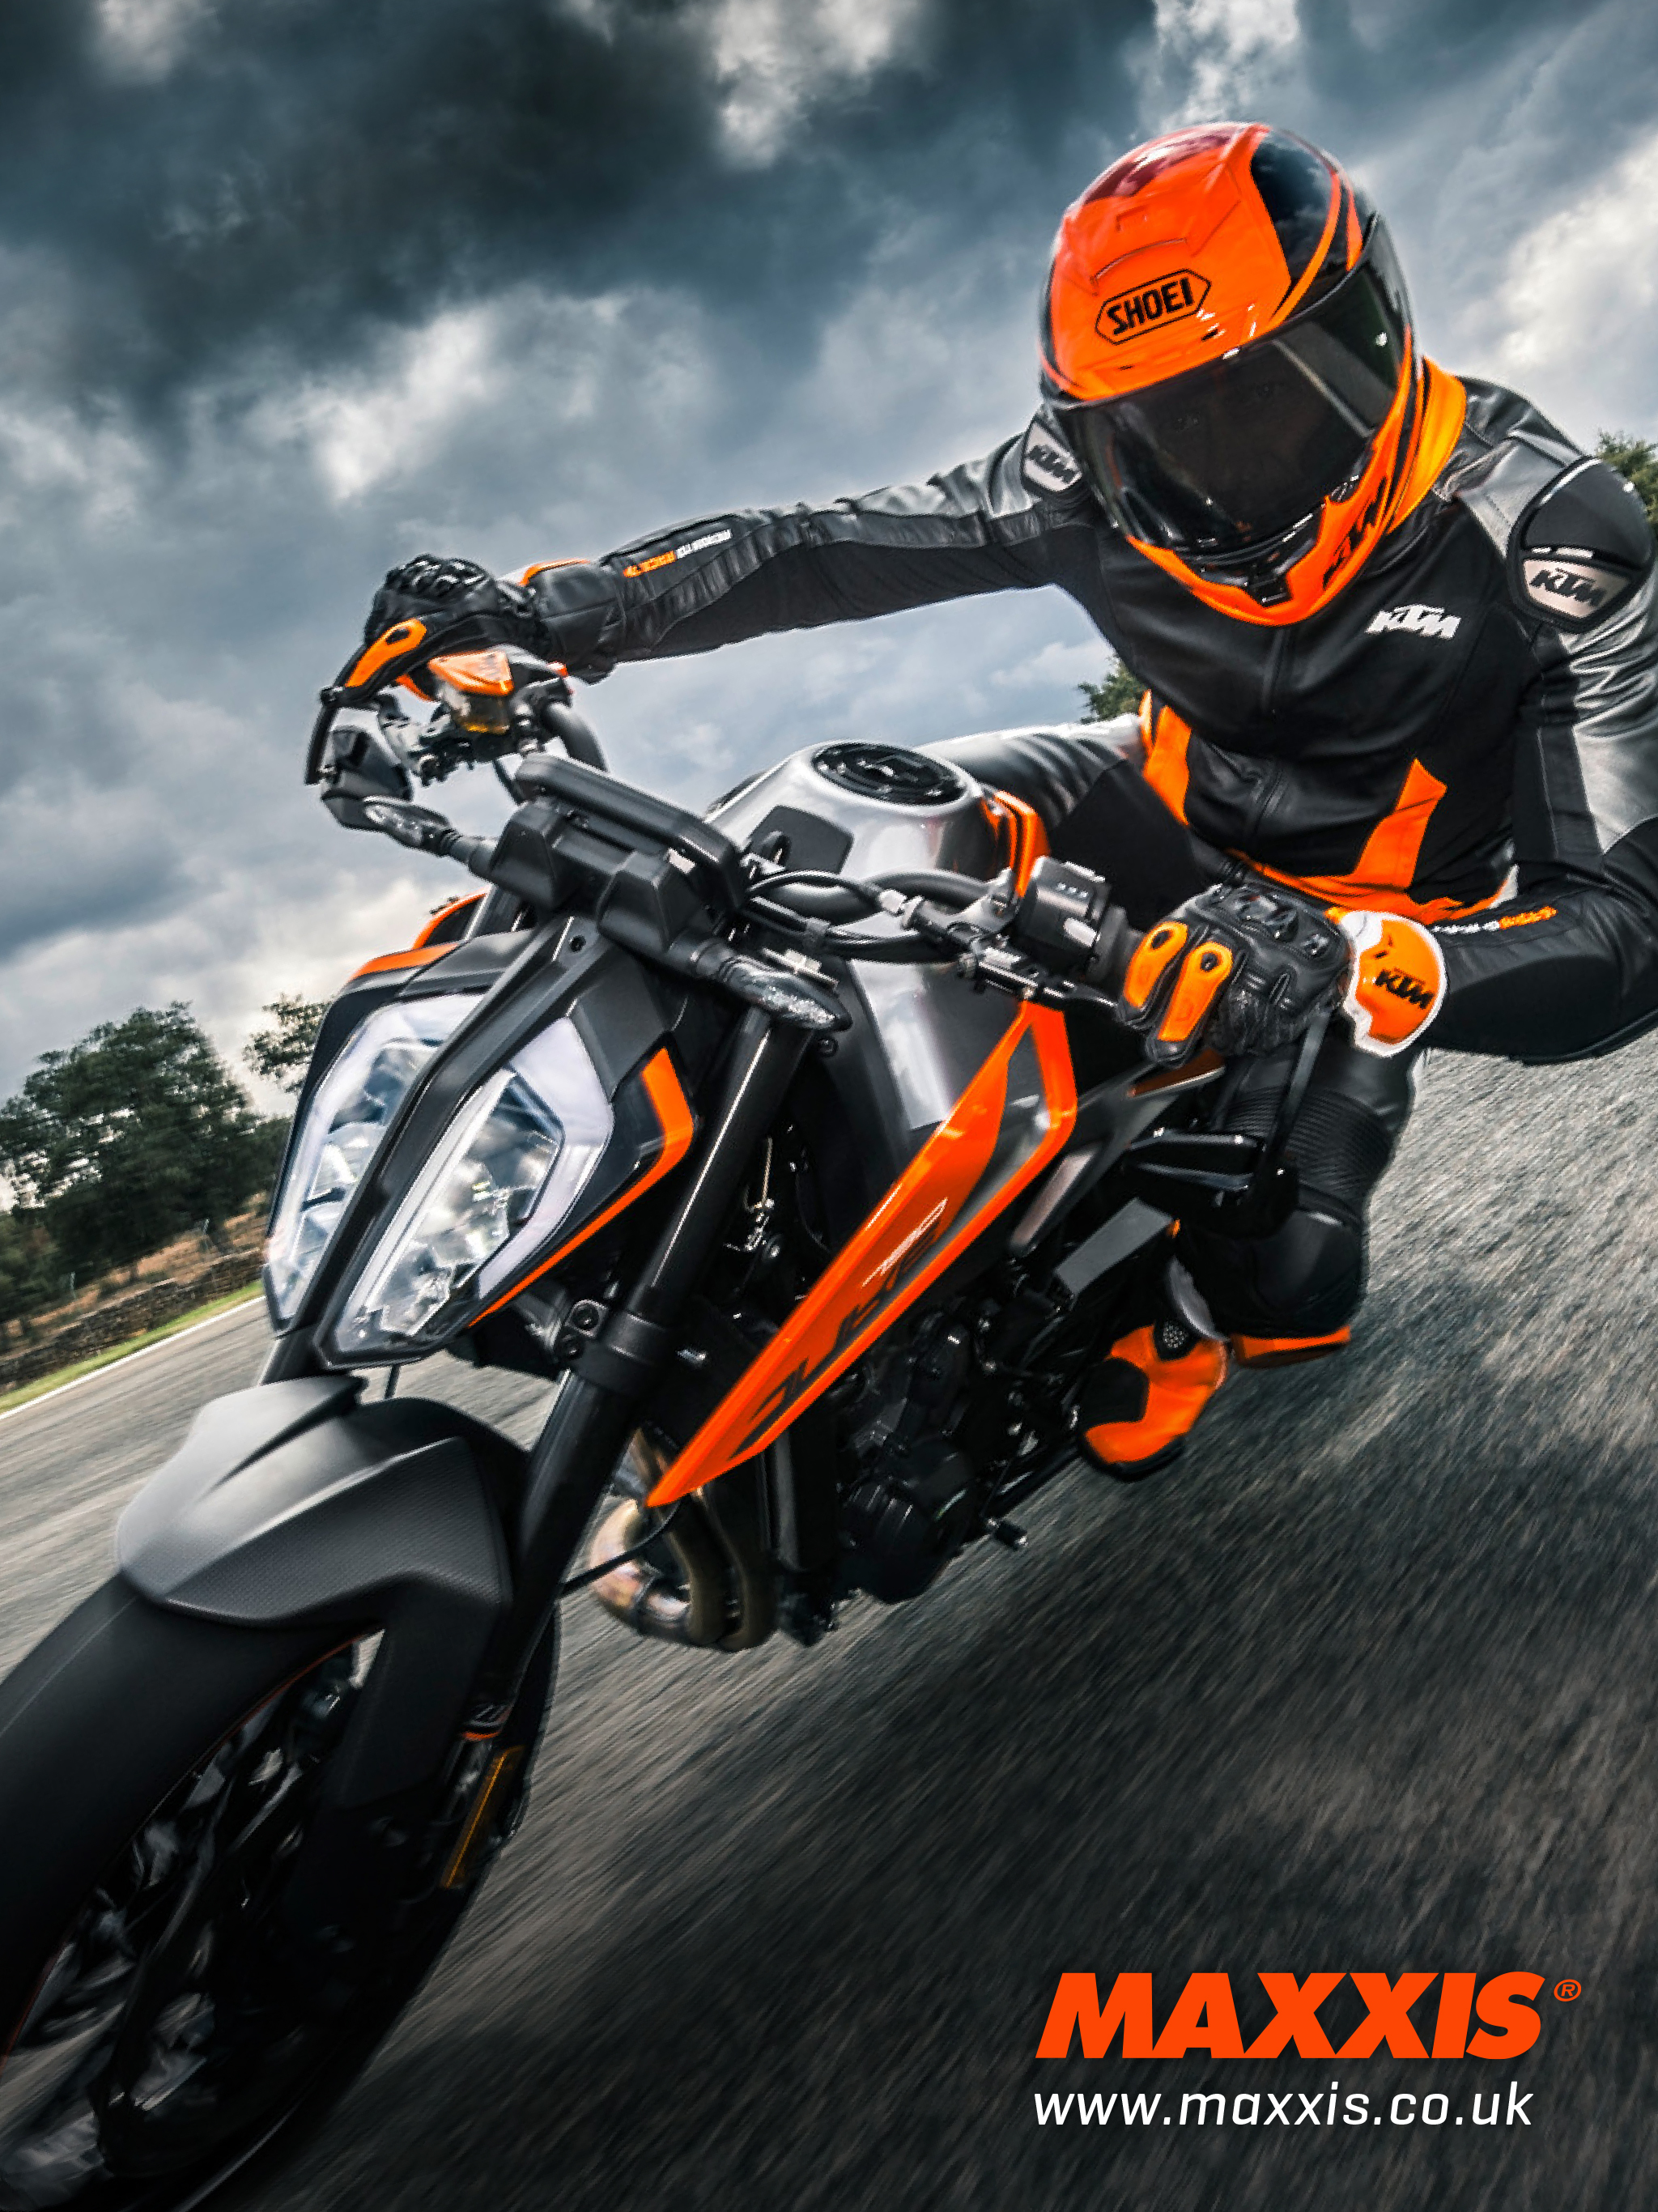 motorcycle wallpaper,motorcycle racer,motorcycle,motorcycling,superbike racing,vehicle